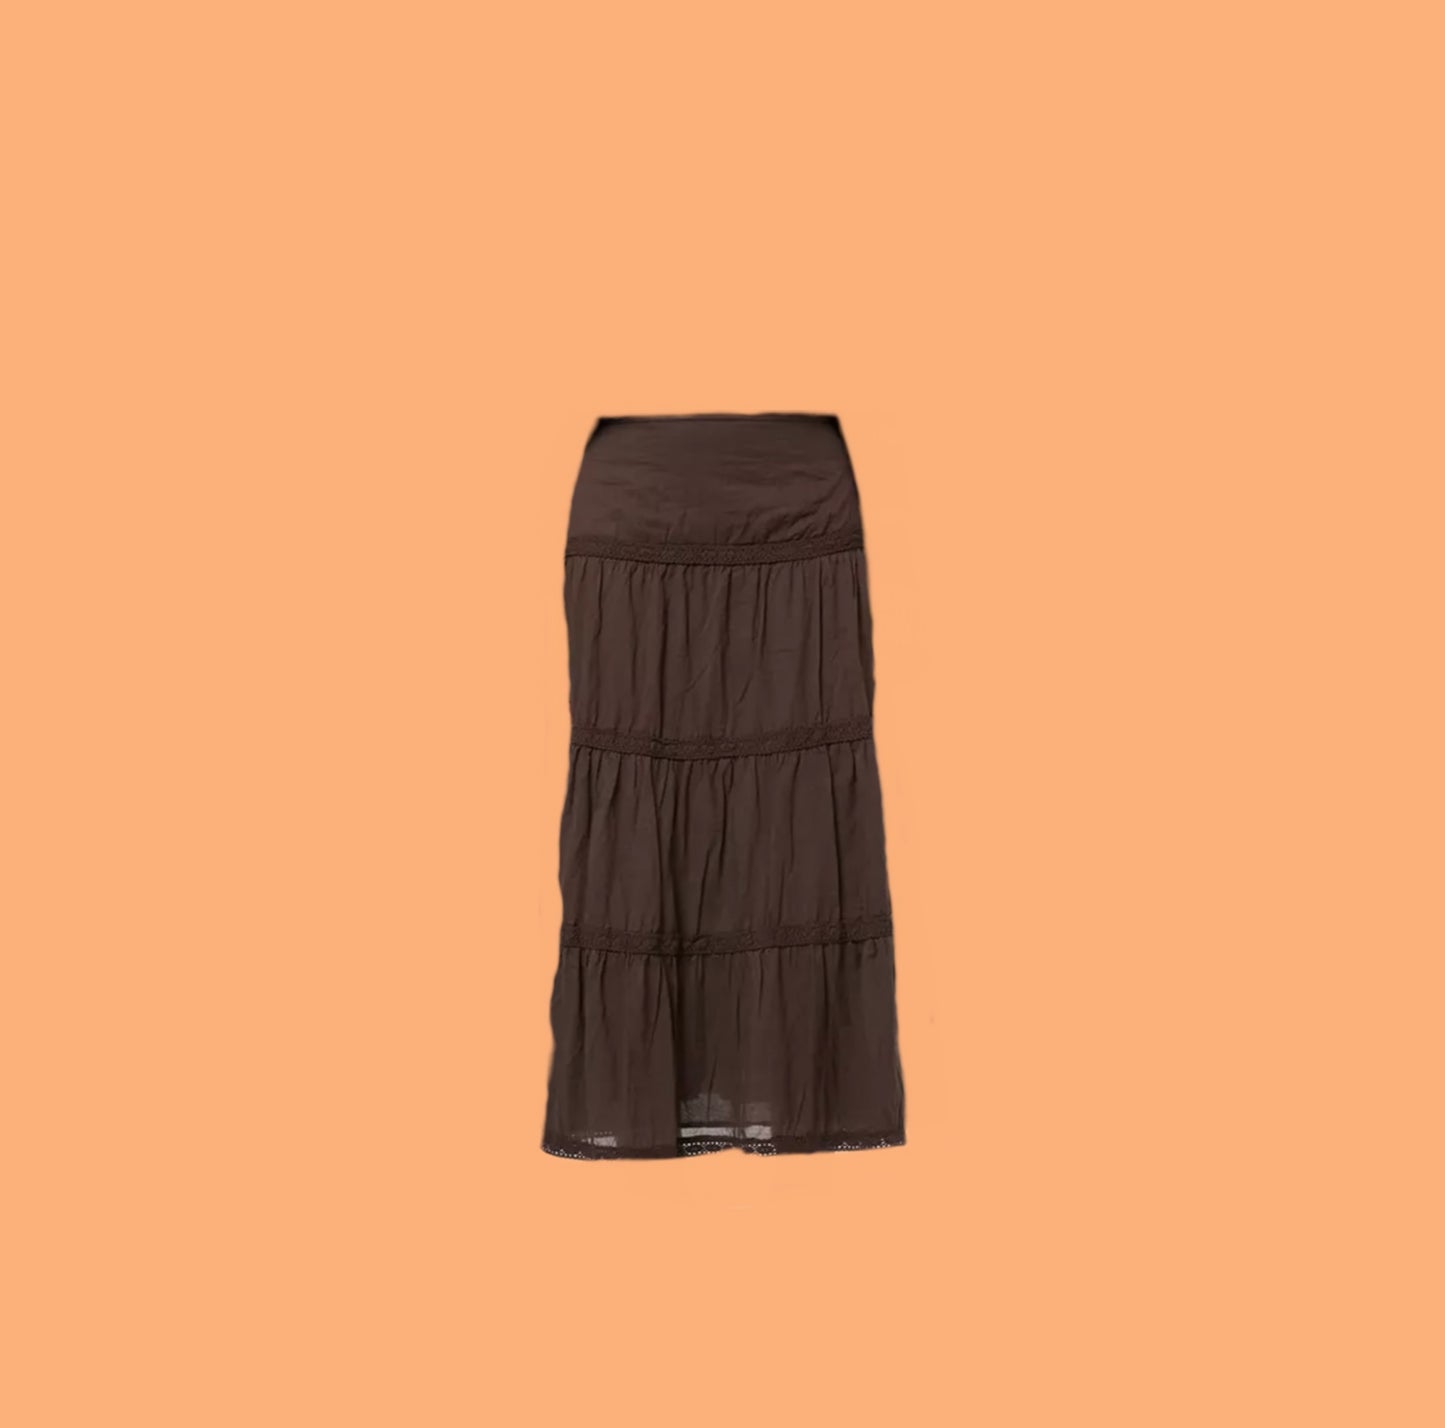 Brown Maxi Skirt